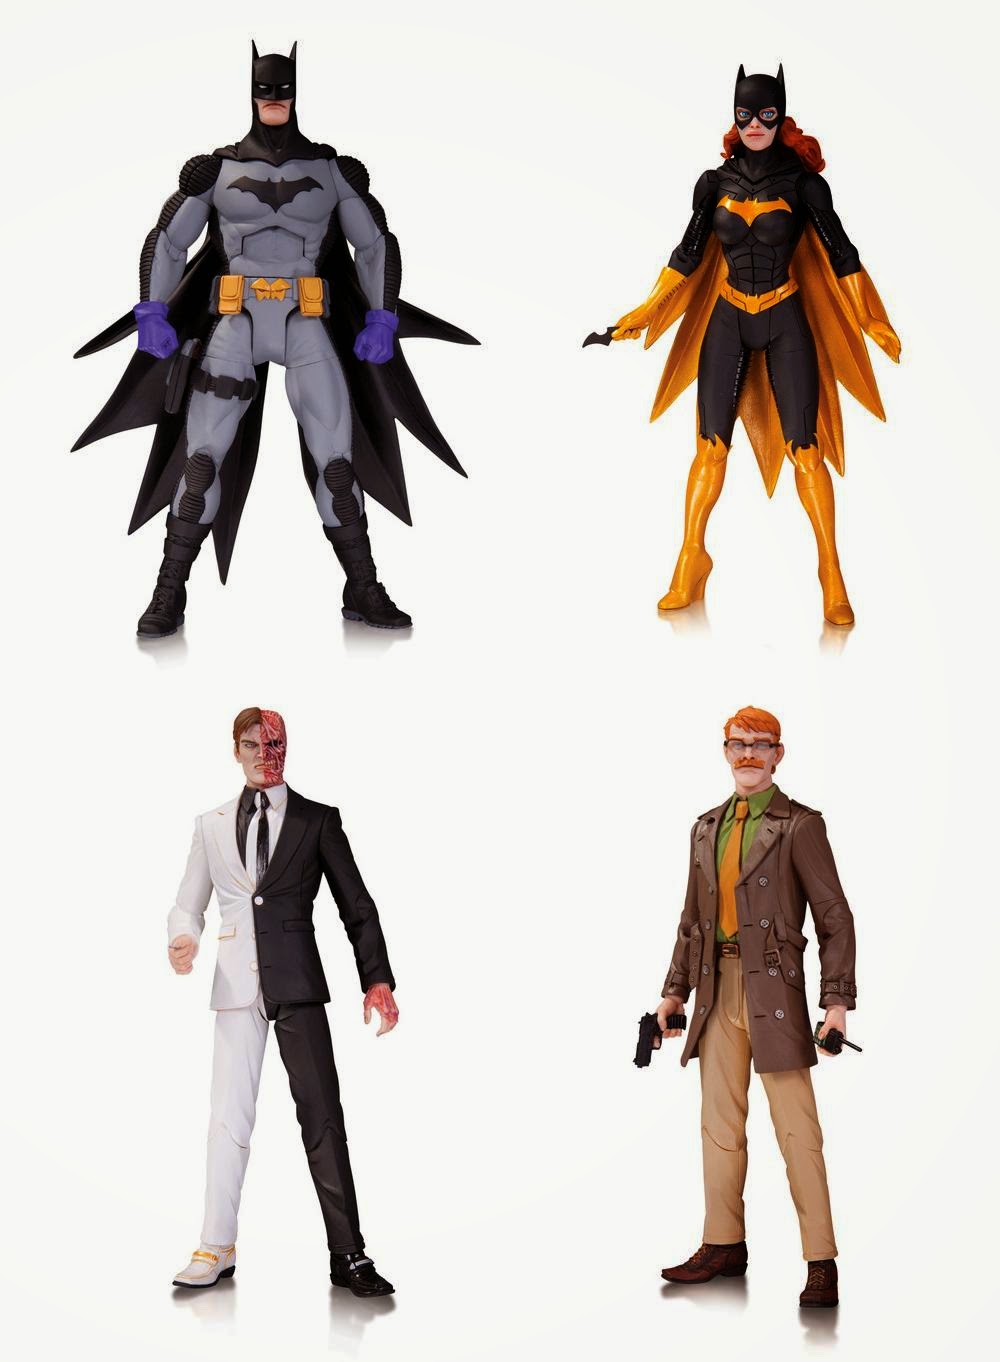 San Diego Comic-Con 2014 First Look: DC Comics Greg Capullo Batman Designer Series Wave 3 Action Figures - Zero Year Batman, Batgirl, Two-Face and Commissioner James Gordon